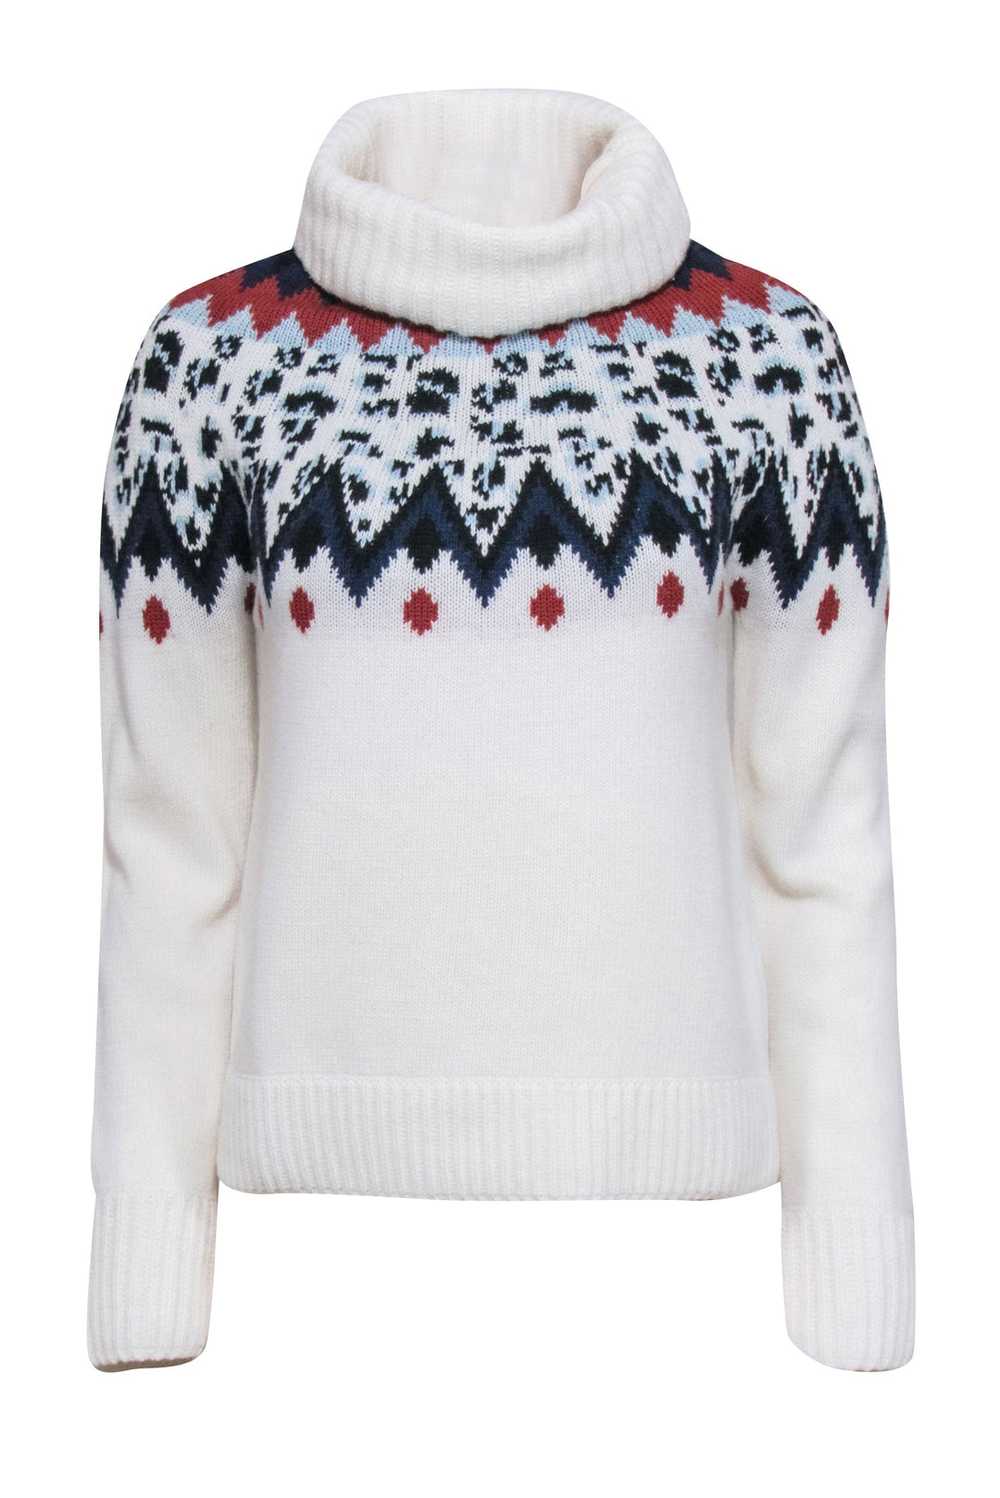 Veronica Beard - Ivory Turtleneck Sweater Sz M - image 1